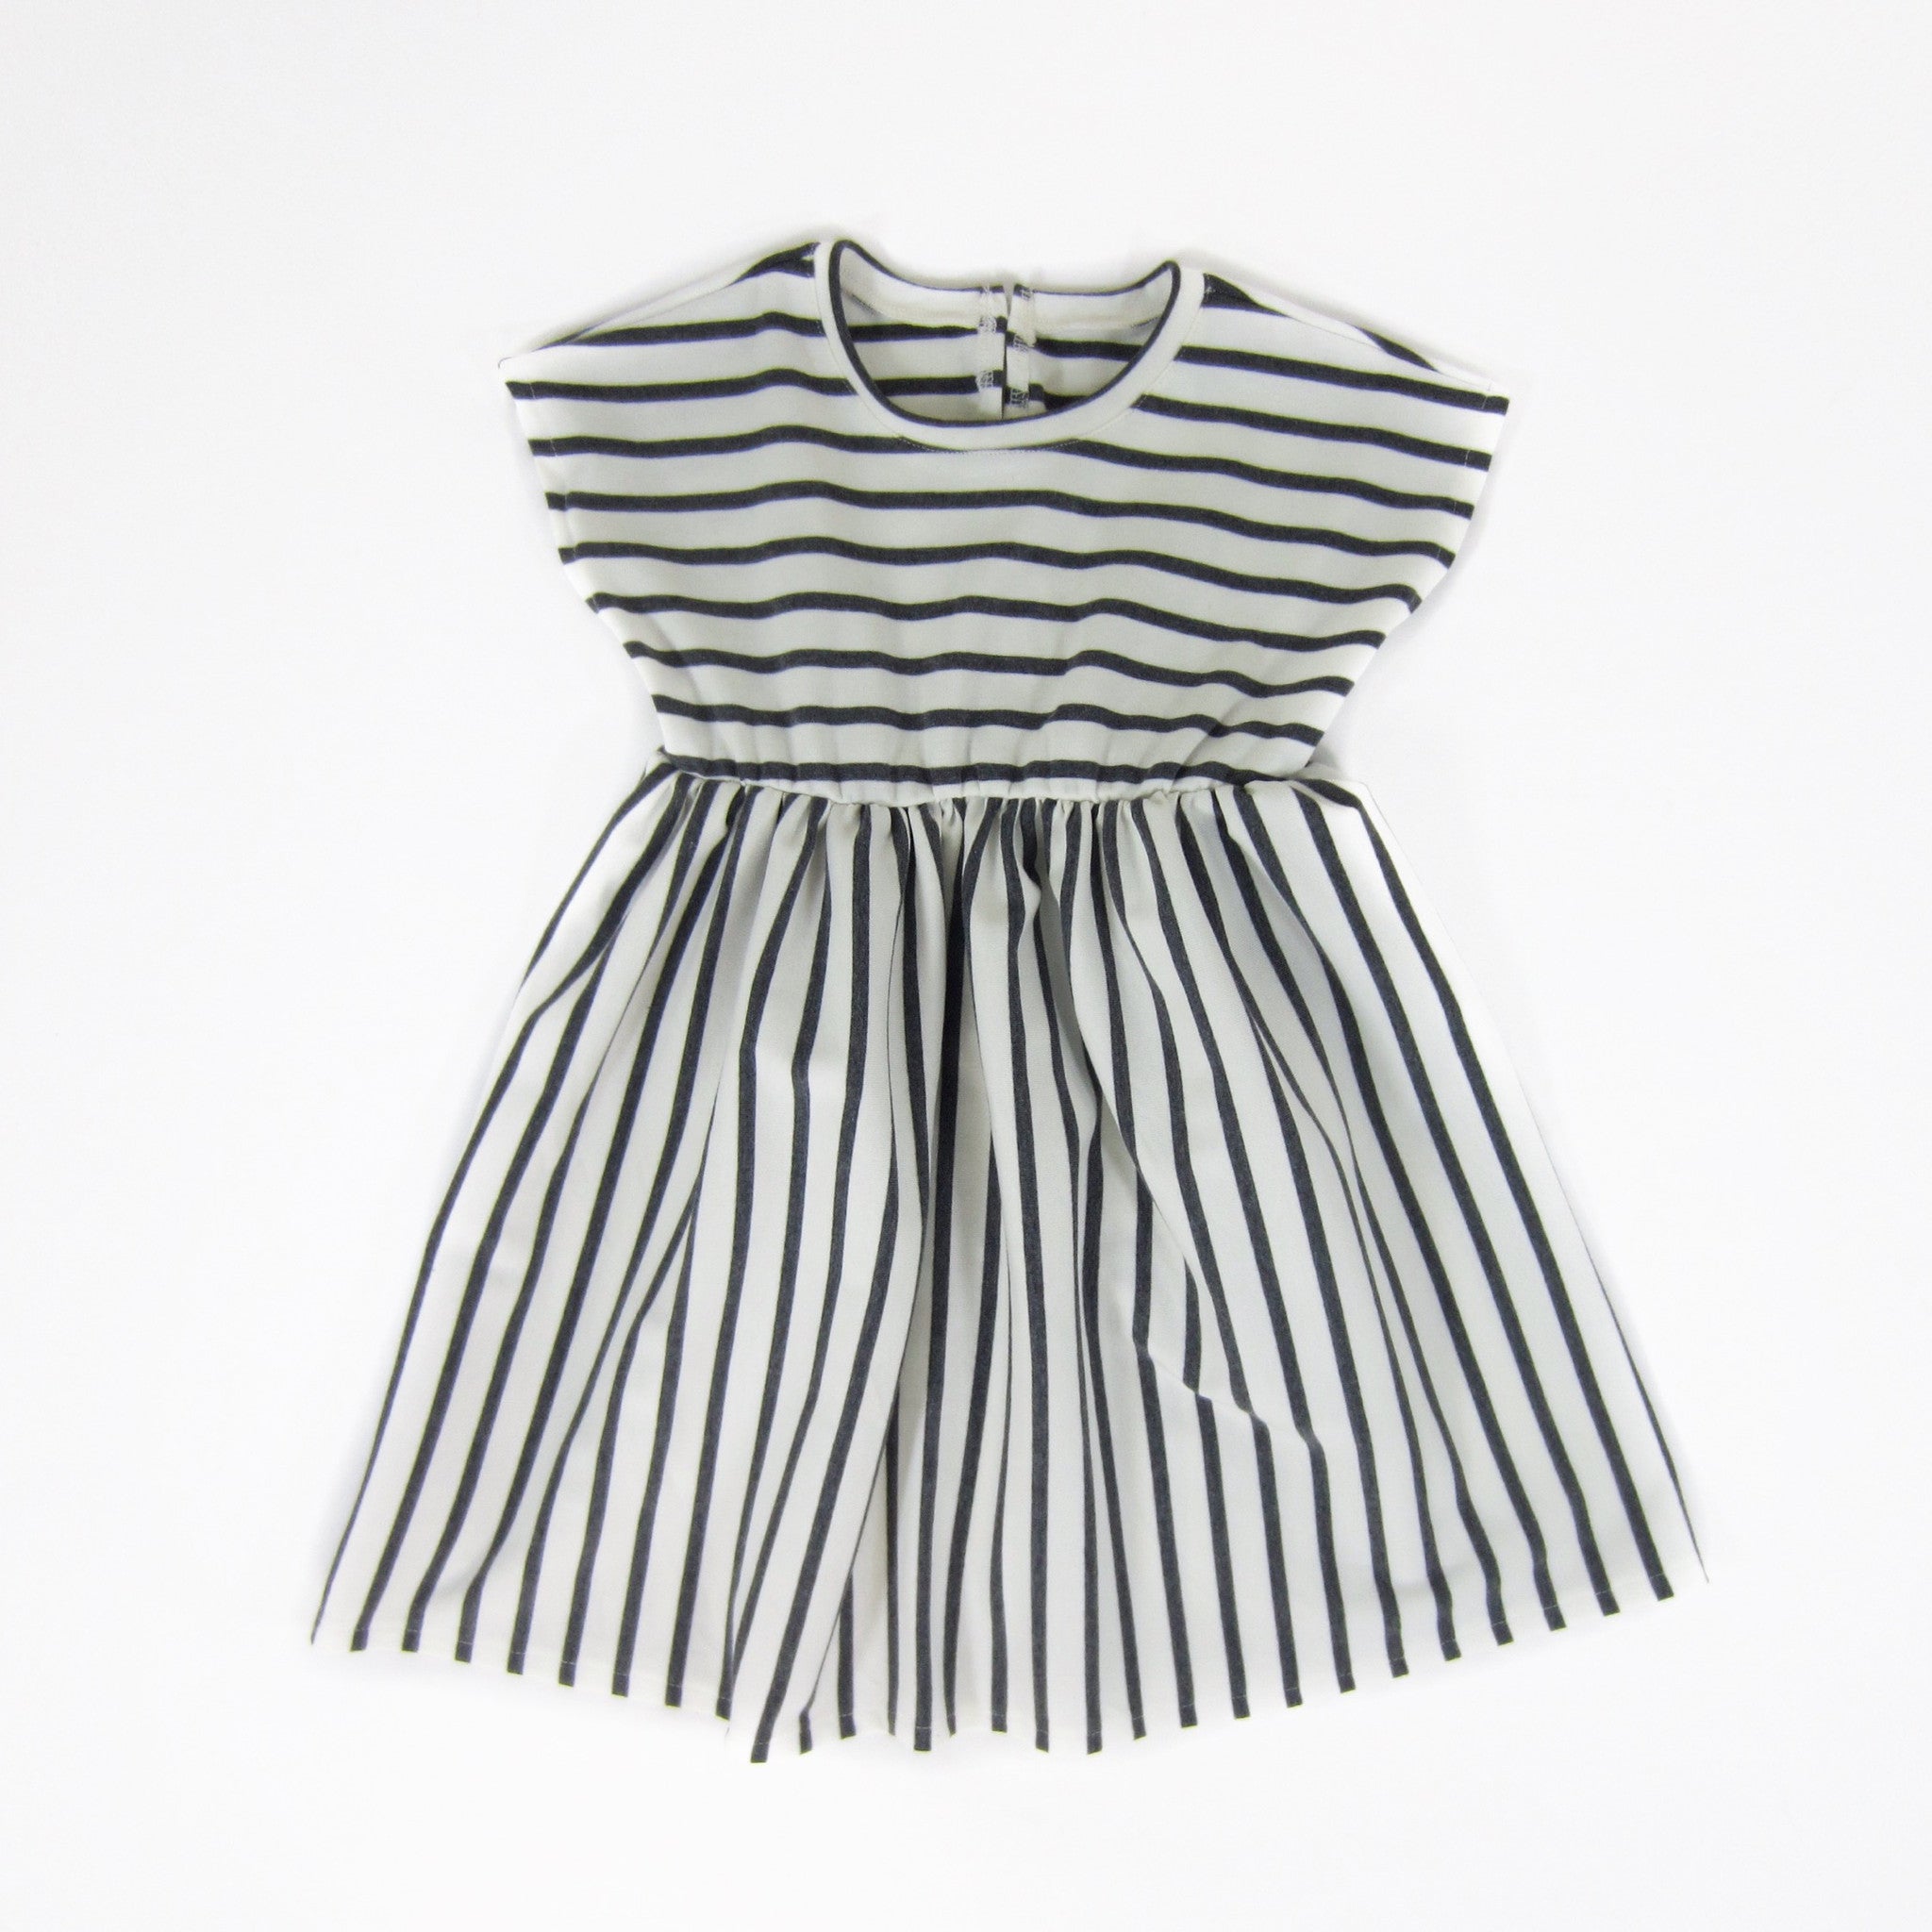 grey white striped dress